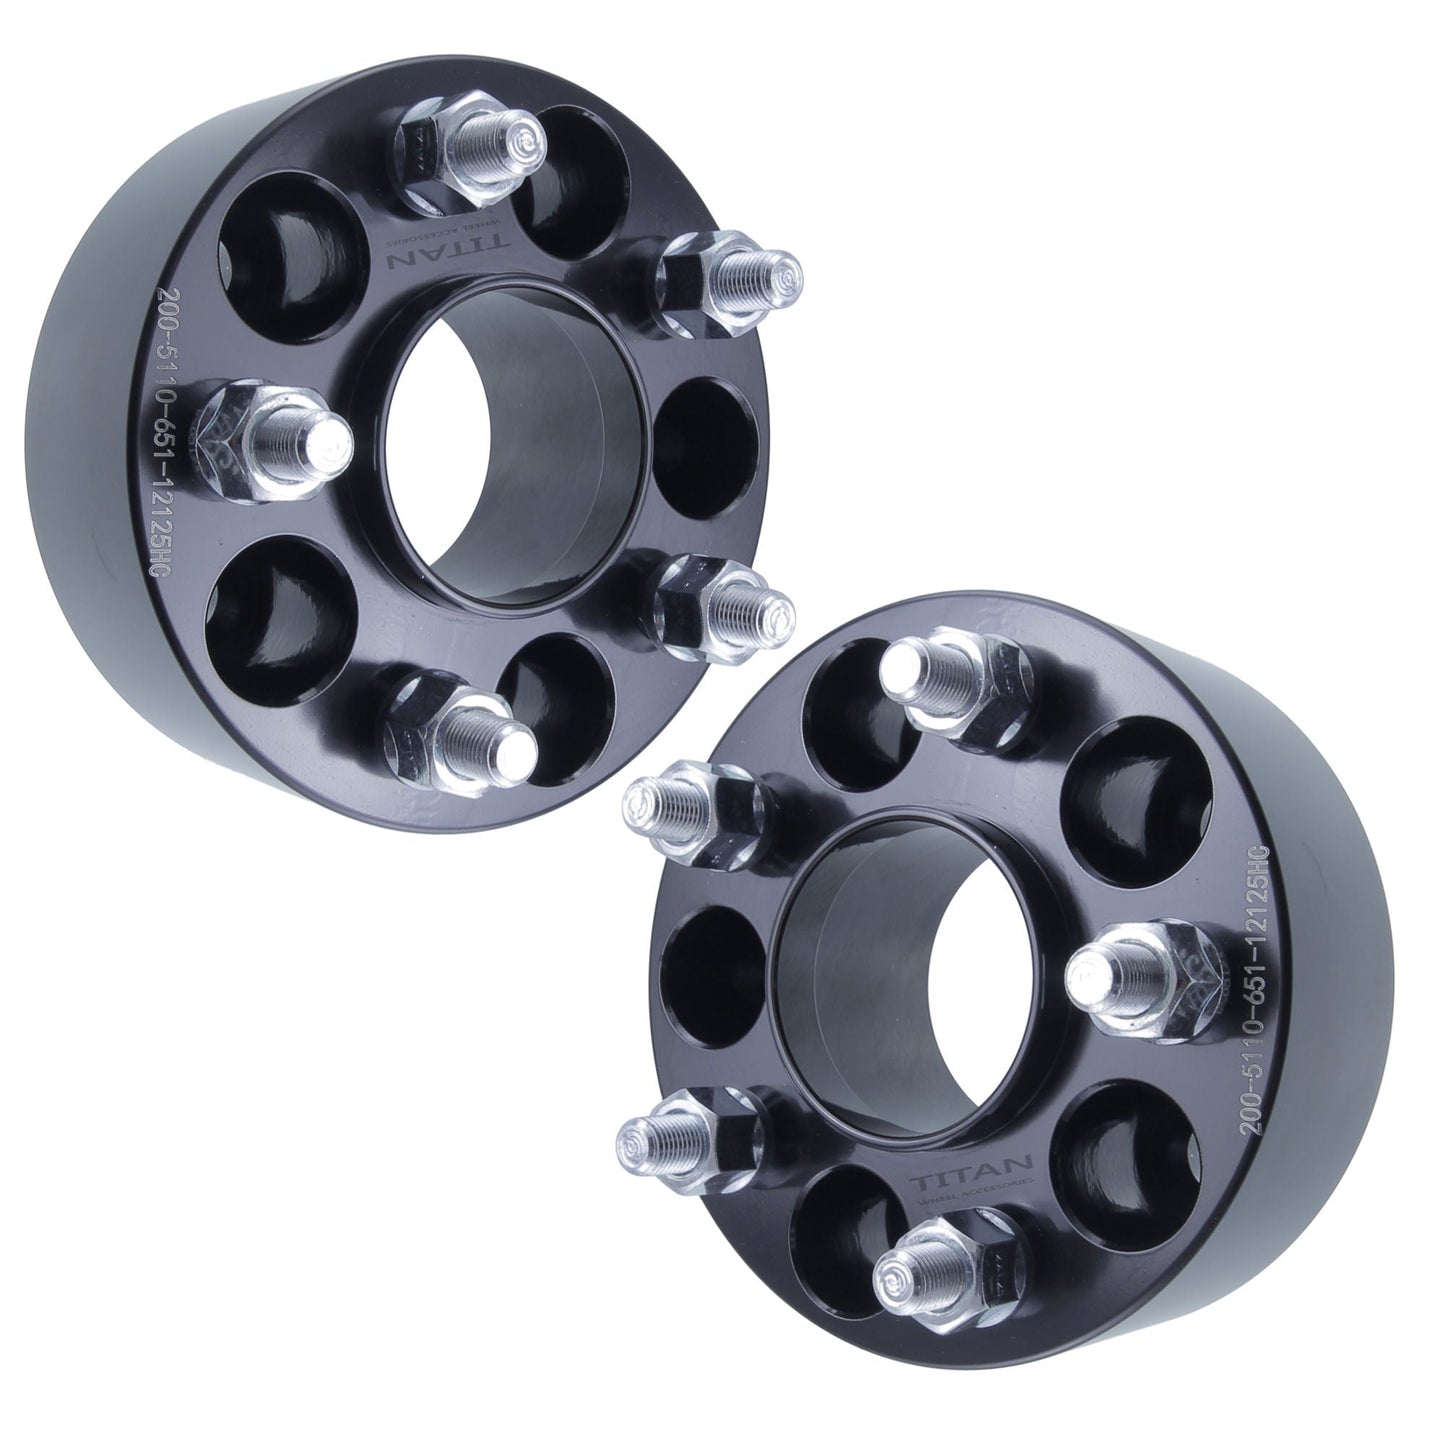 50mm (2") Titan Wheel Spacers for Scion FRS Subaru Impreza BRZ | 5x100 | 56.1 Hubcentric |12x1.25 Studs | Set of 4 | Titan Wheel Accessories